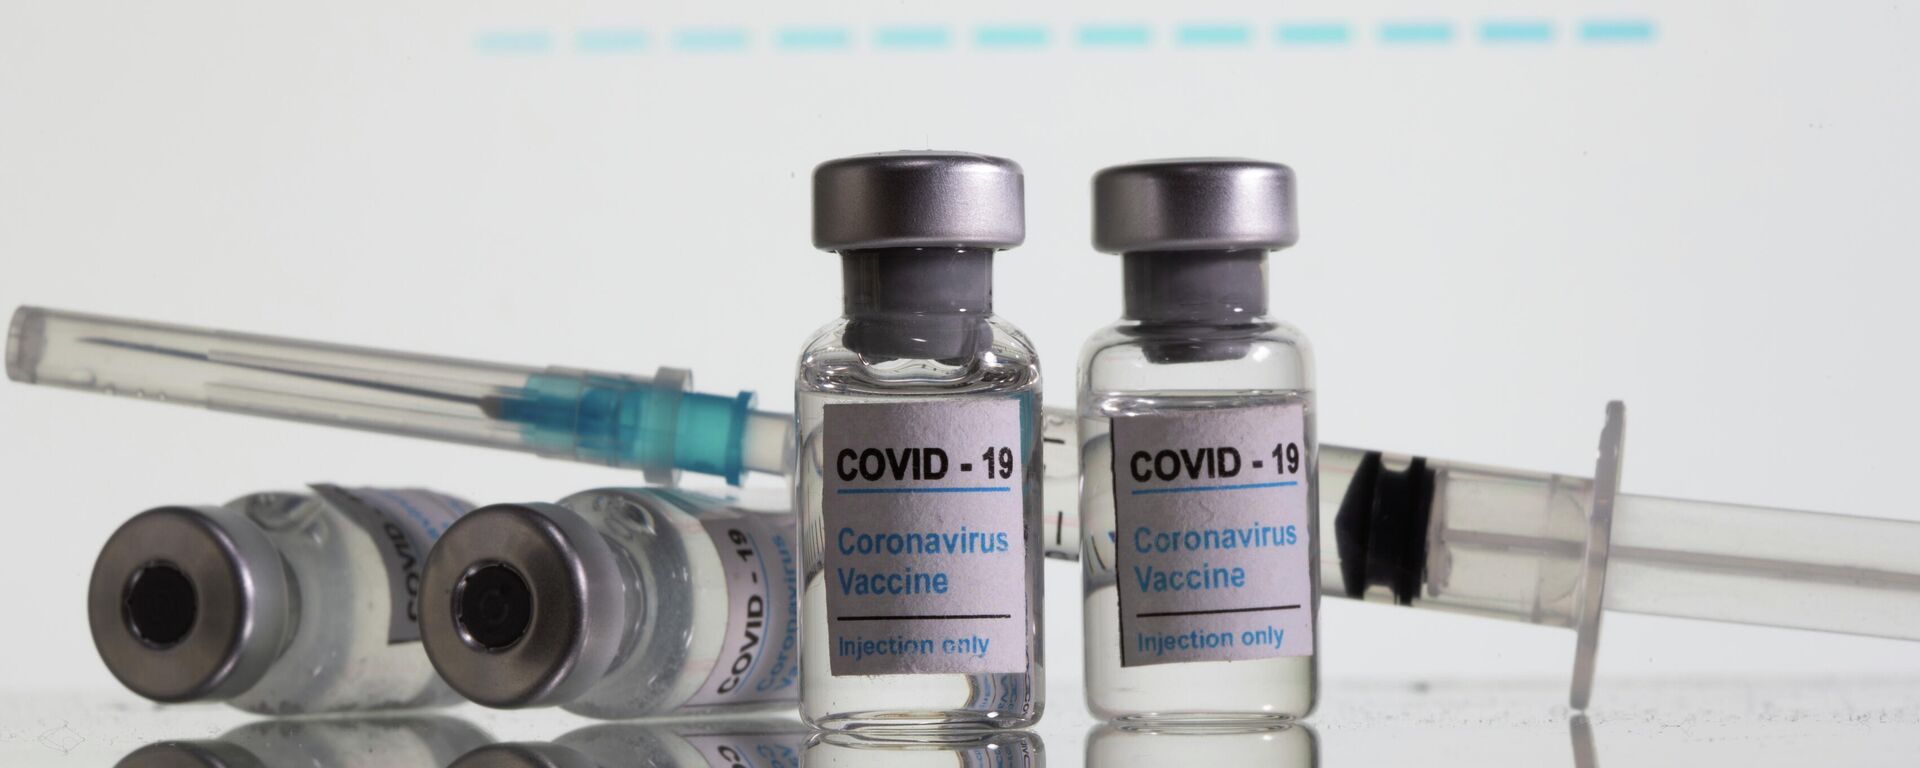 Viales de vacuna de Moderna contra el COVID-19 - Sputnik Mundo, 1920, 22.05.2021